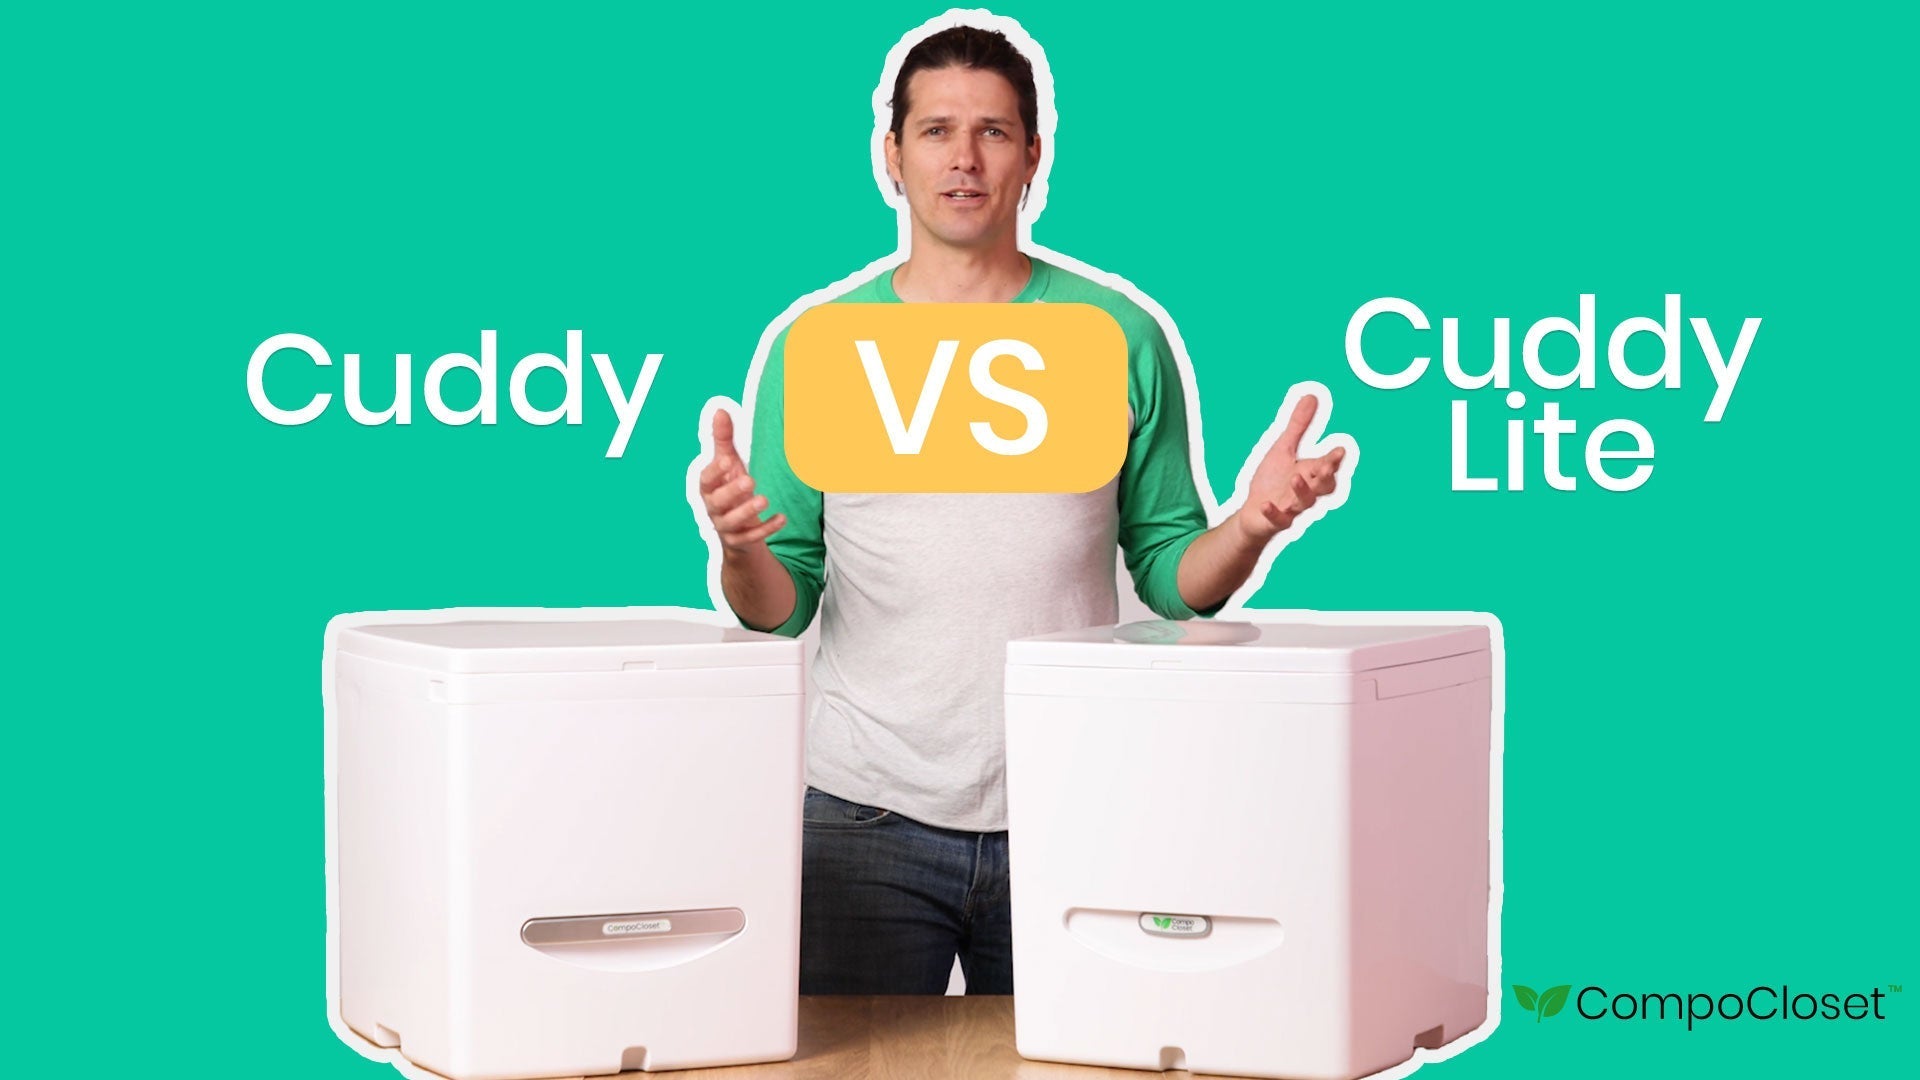 Cuddy vs Cuddy Lite